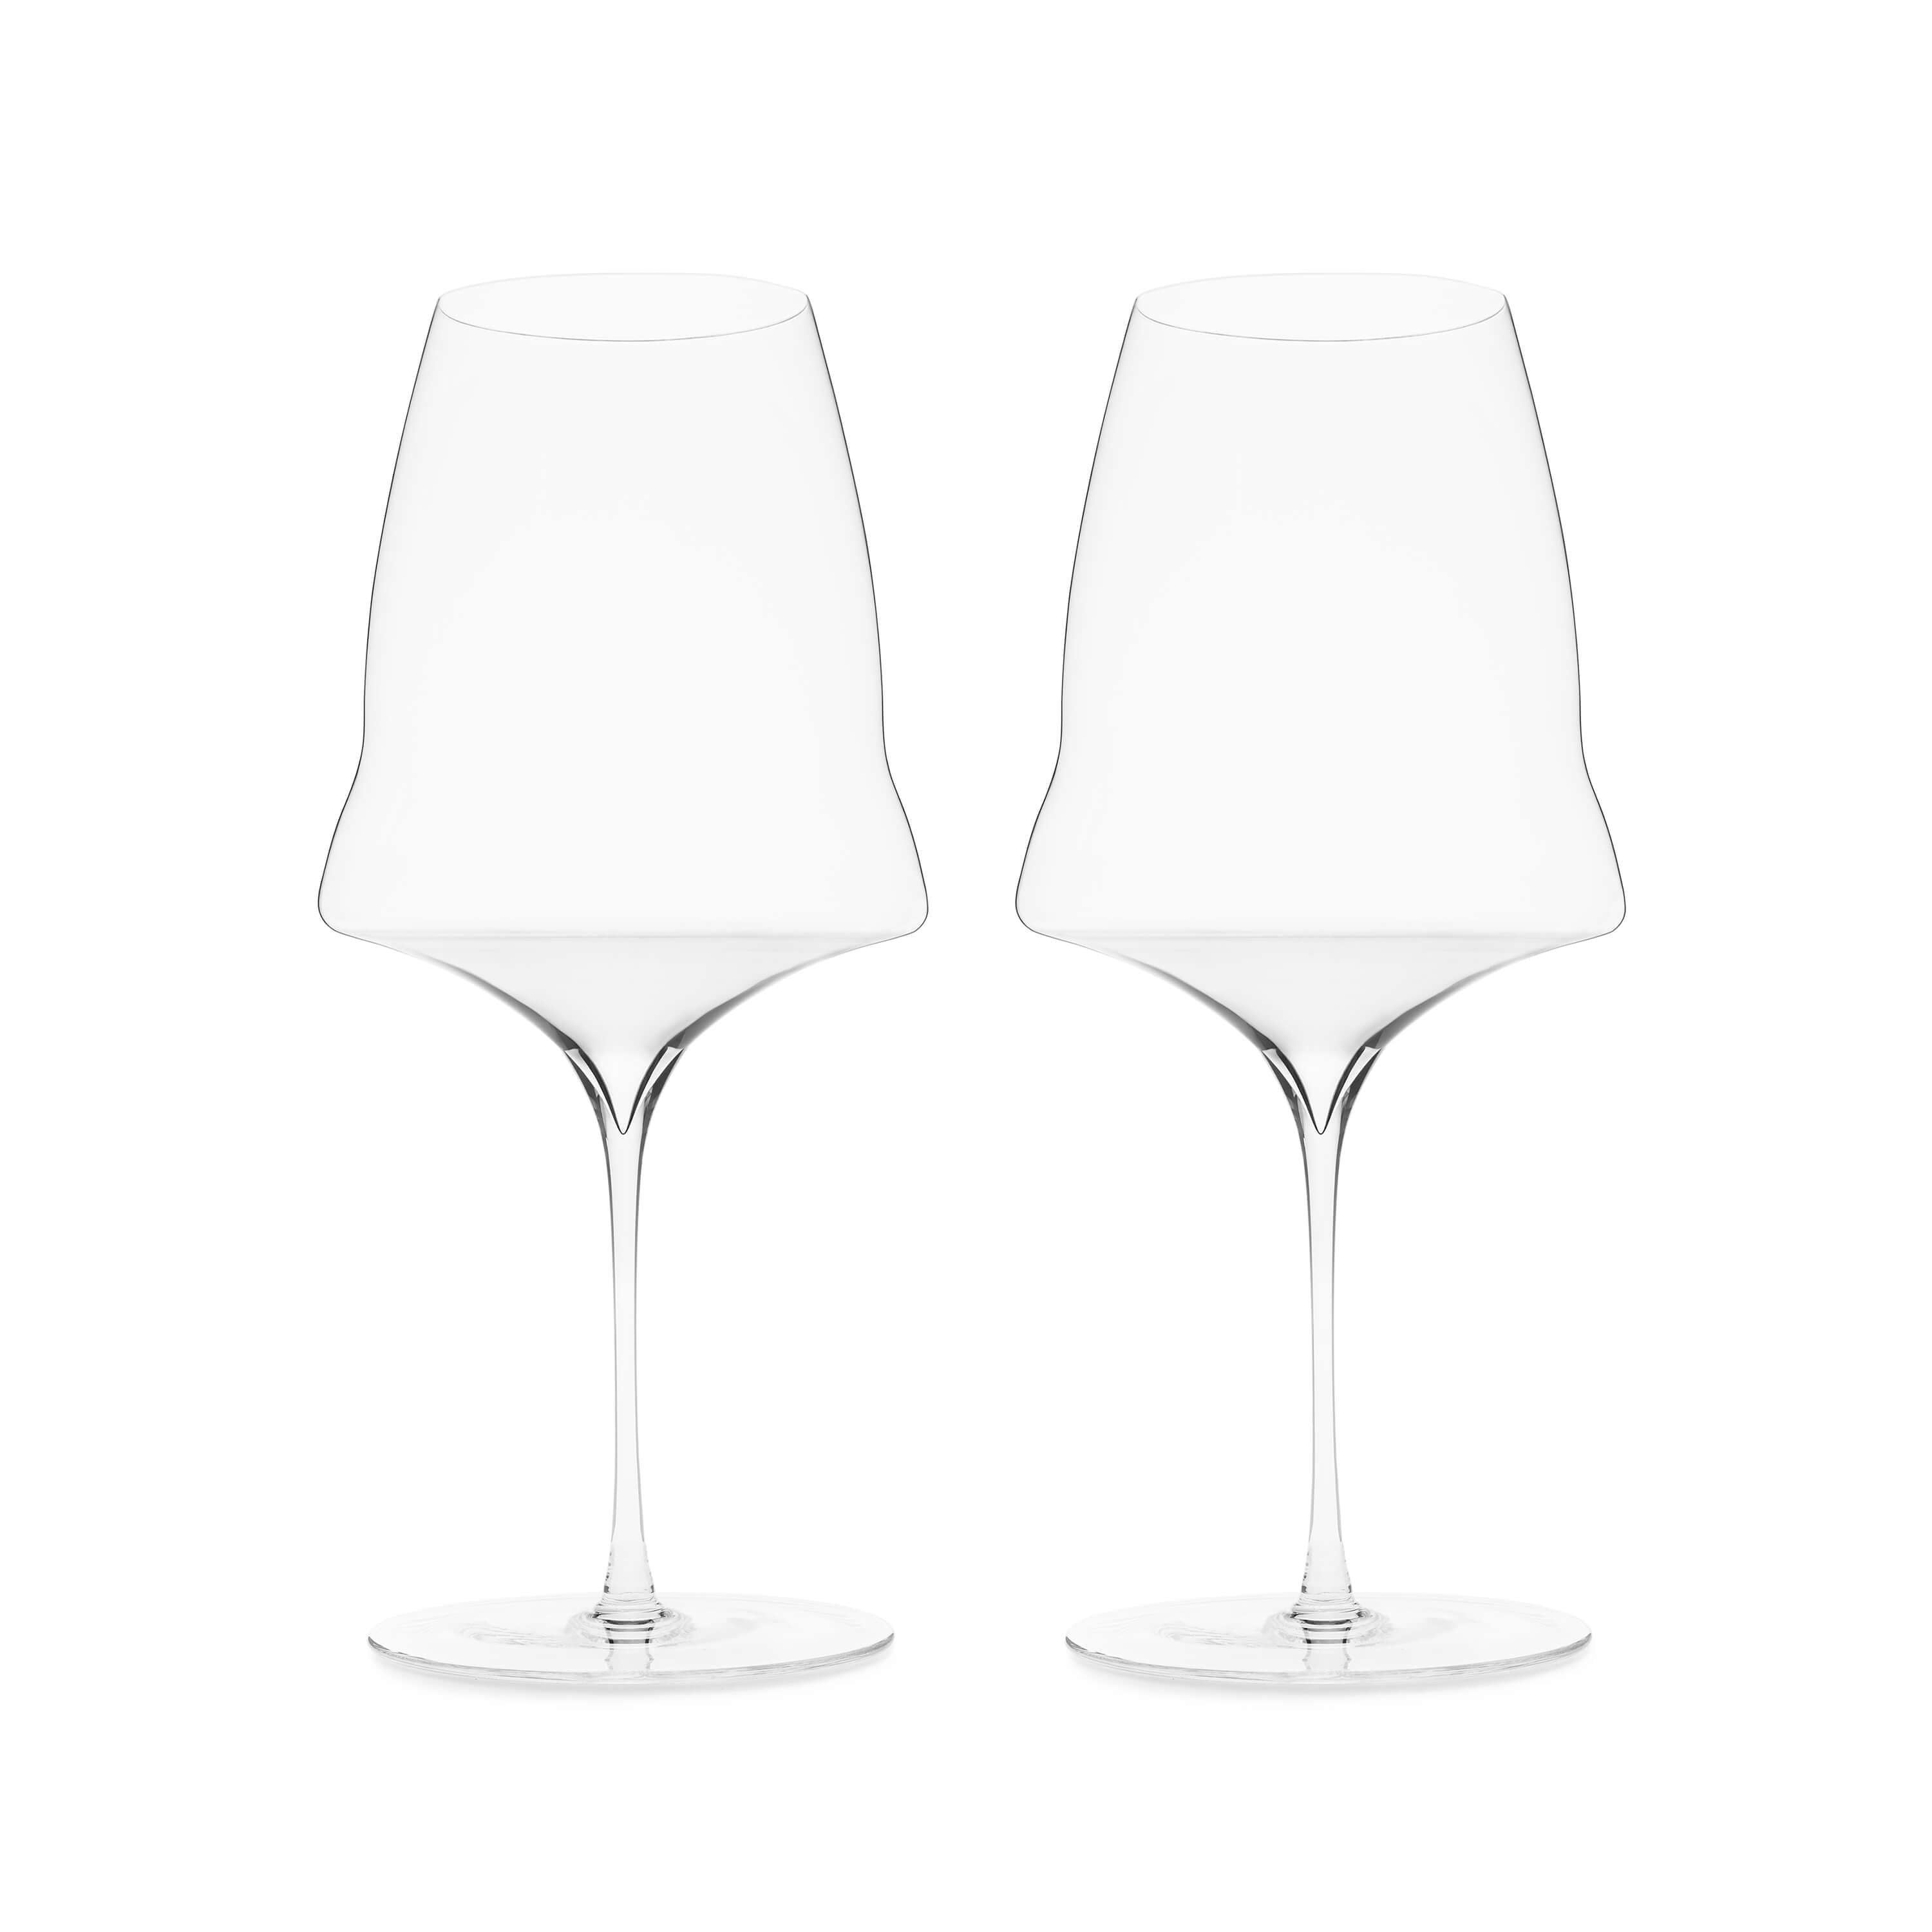 Two JOSEPHINE red wine glasses